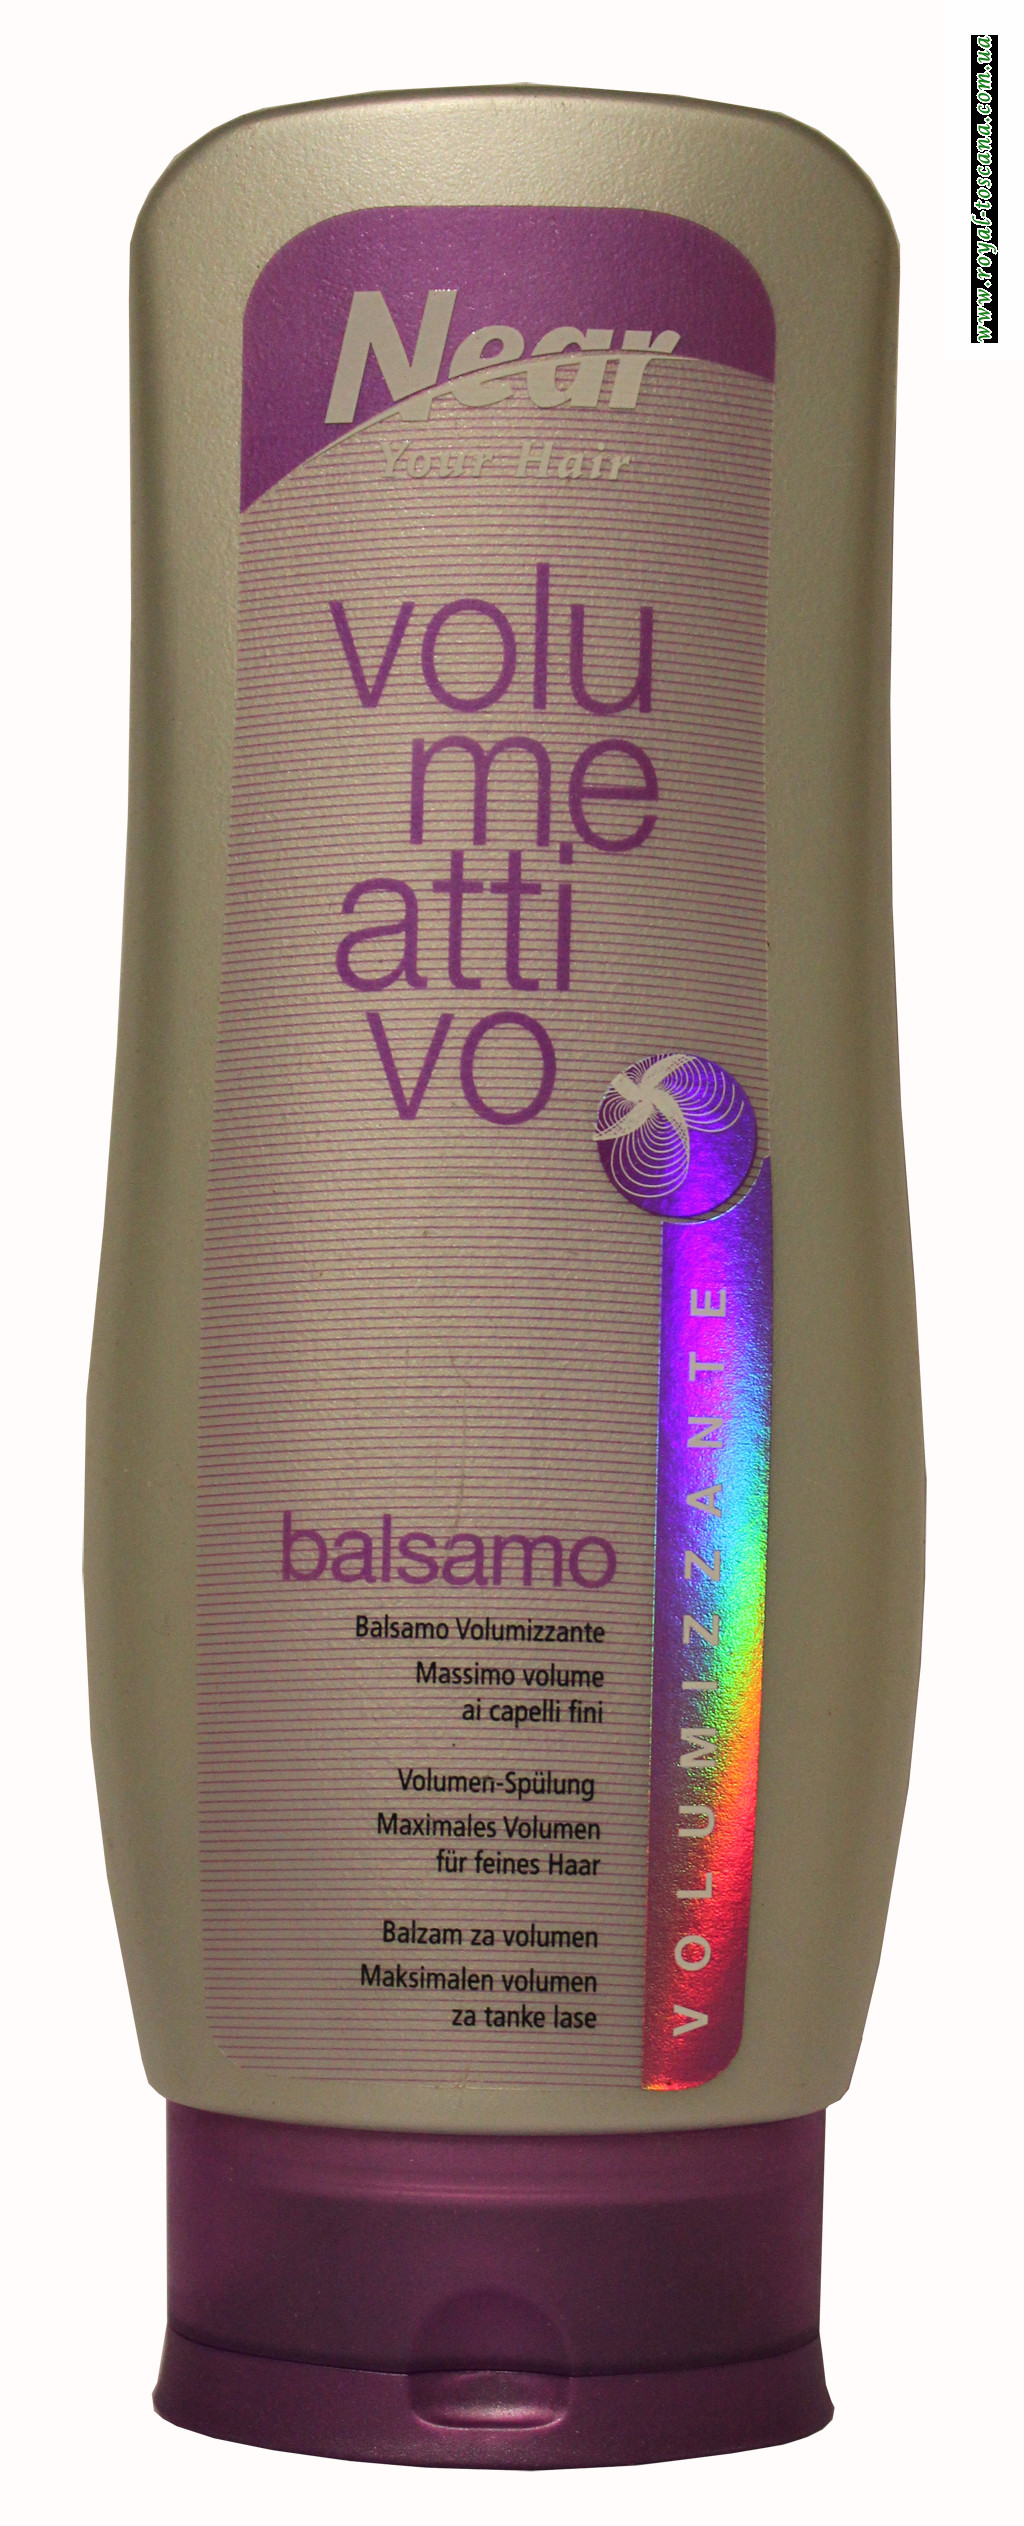 Бальзам для объема волос Near Volume Attivo